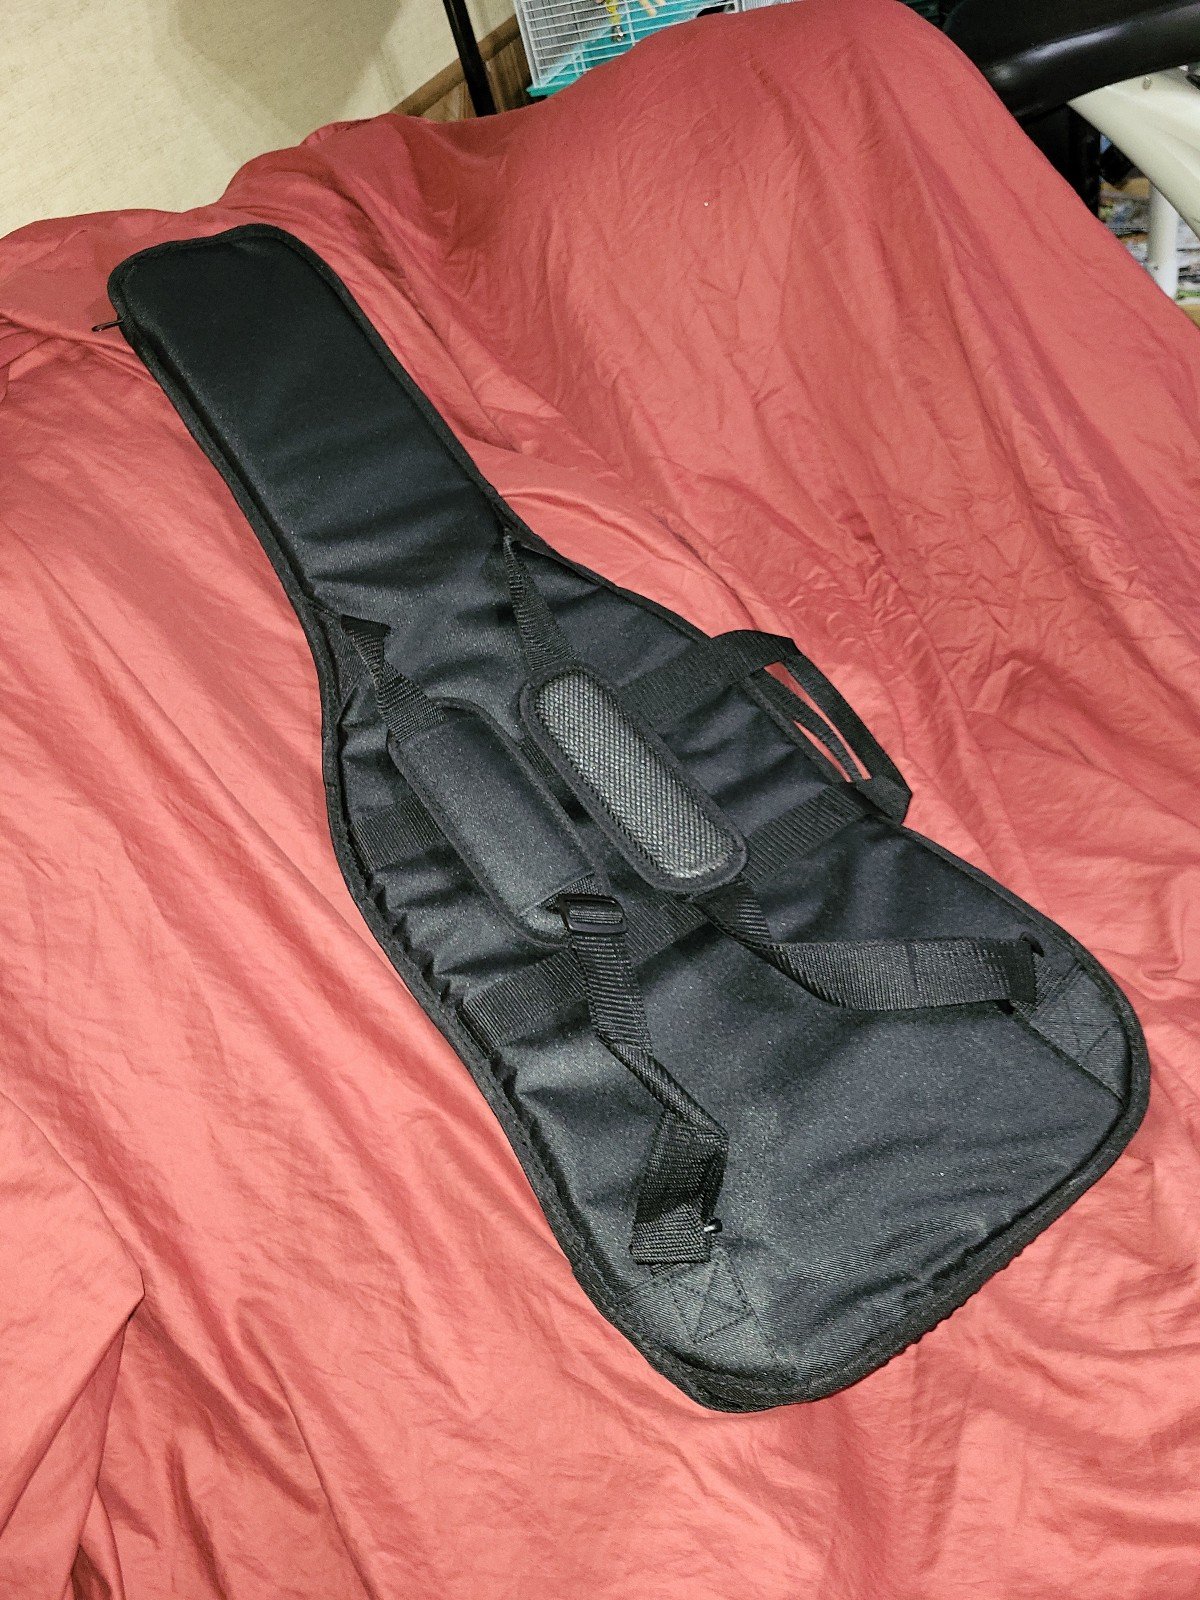 Guitar bag FHXxzJ3MB